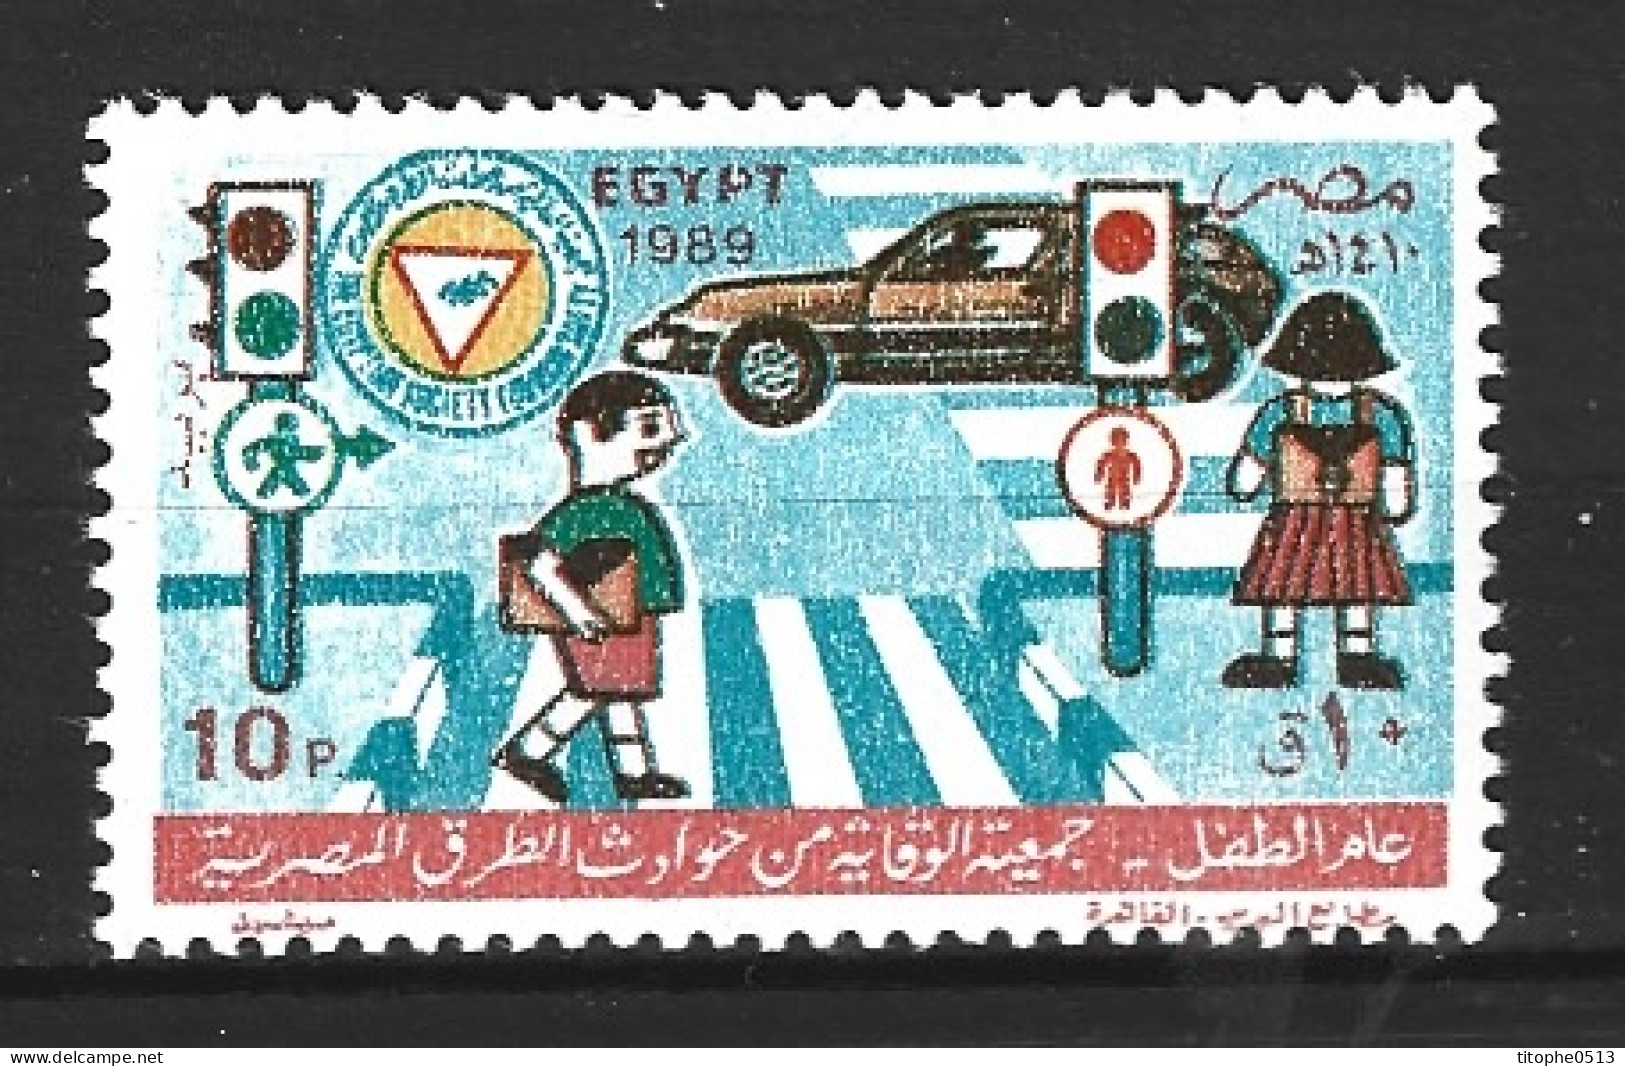 EGYPTE. N°1390 De 1989. Prévention Routière. - Unfälle Und Verkehrssicherheit